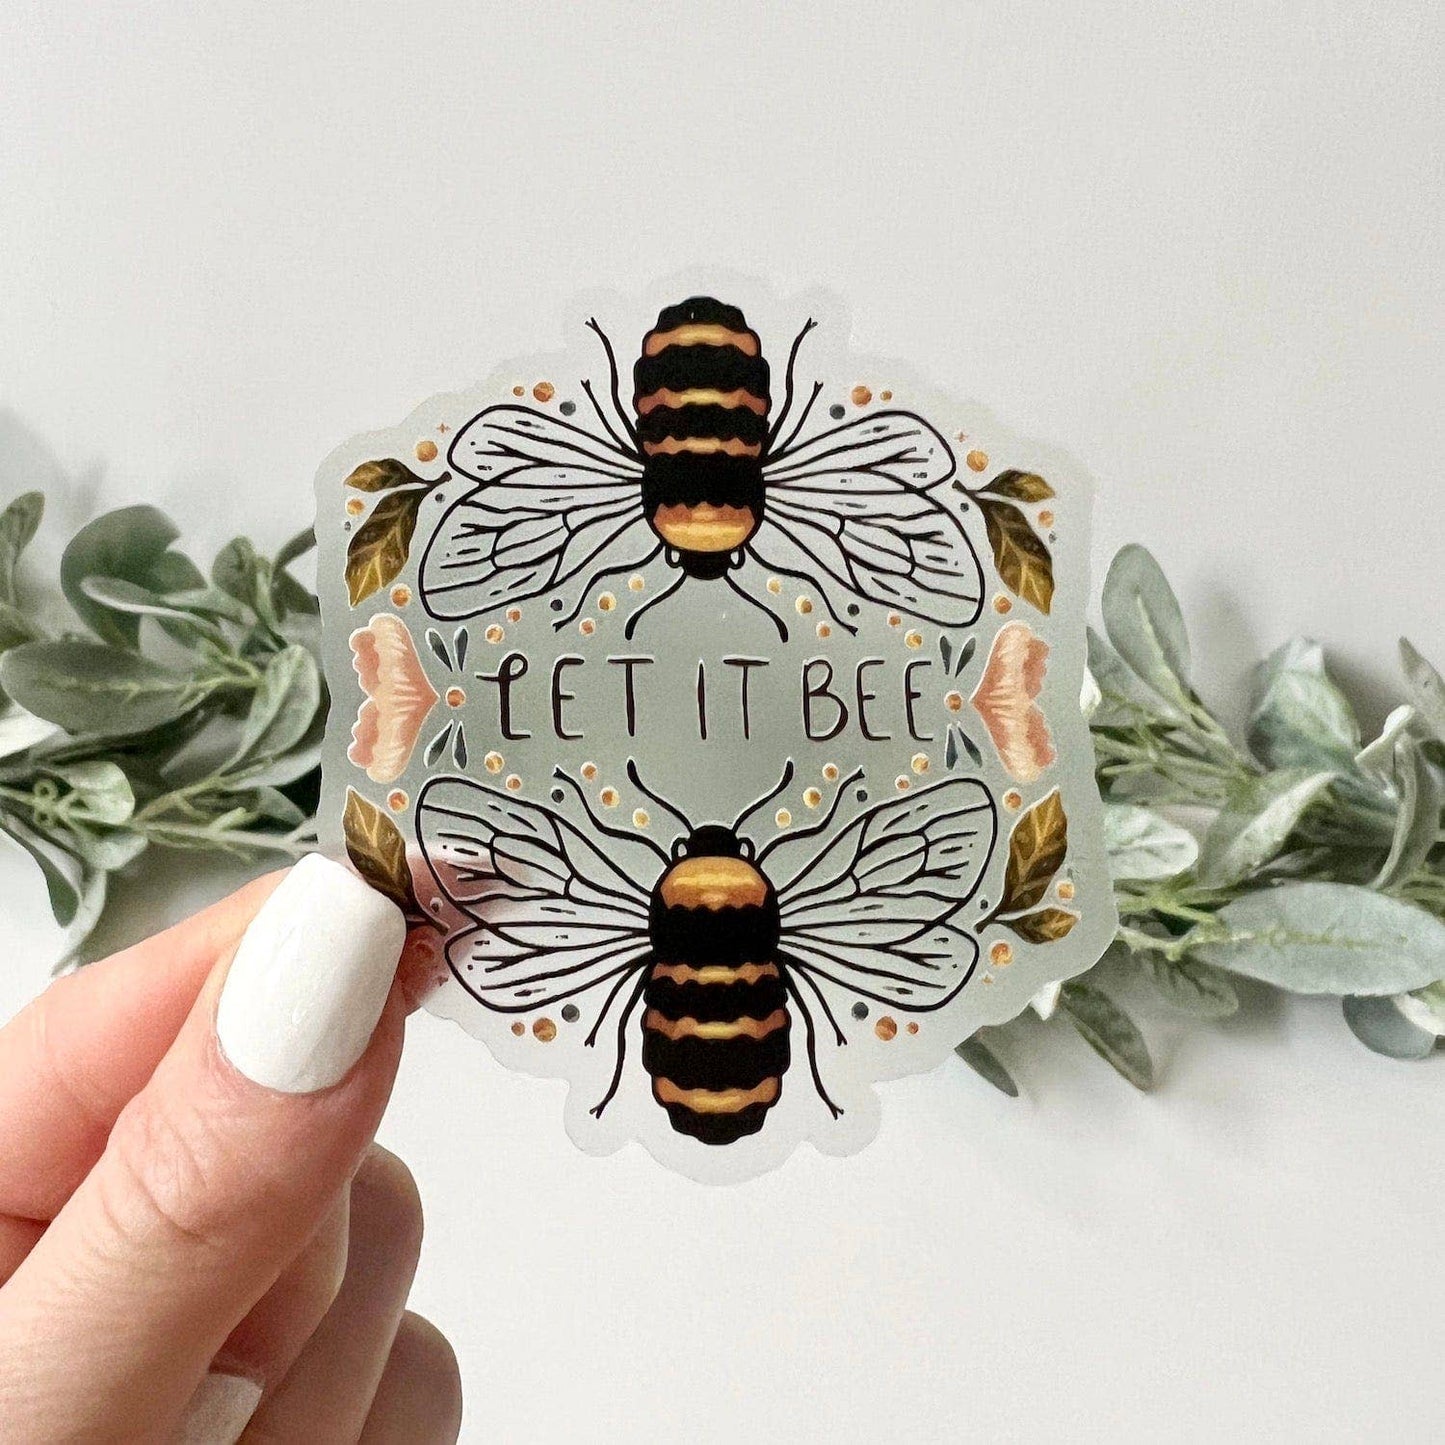 Big Moods - "Let it bee" clear sticker